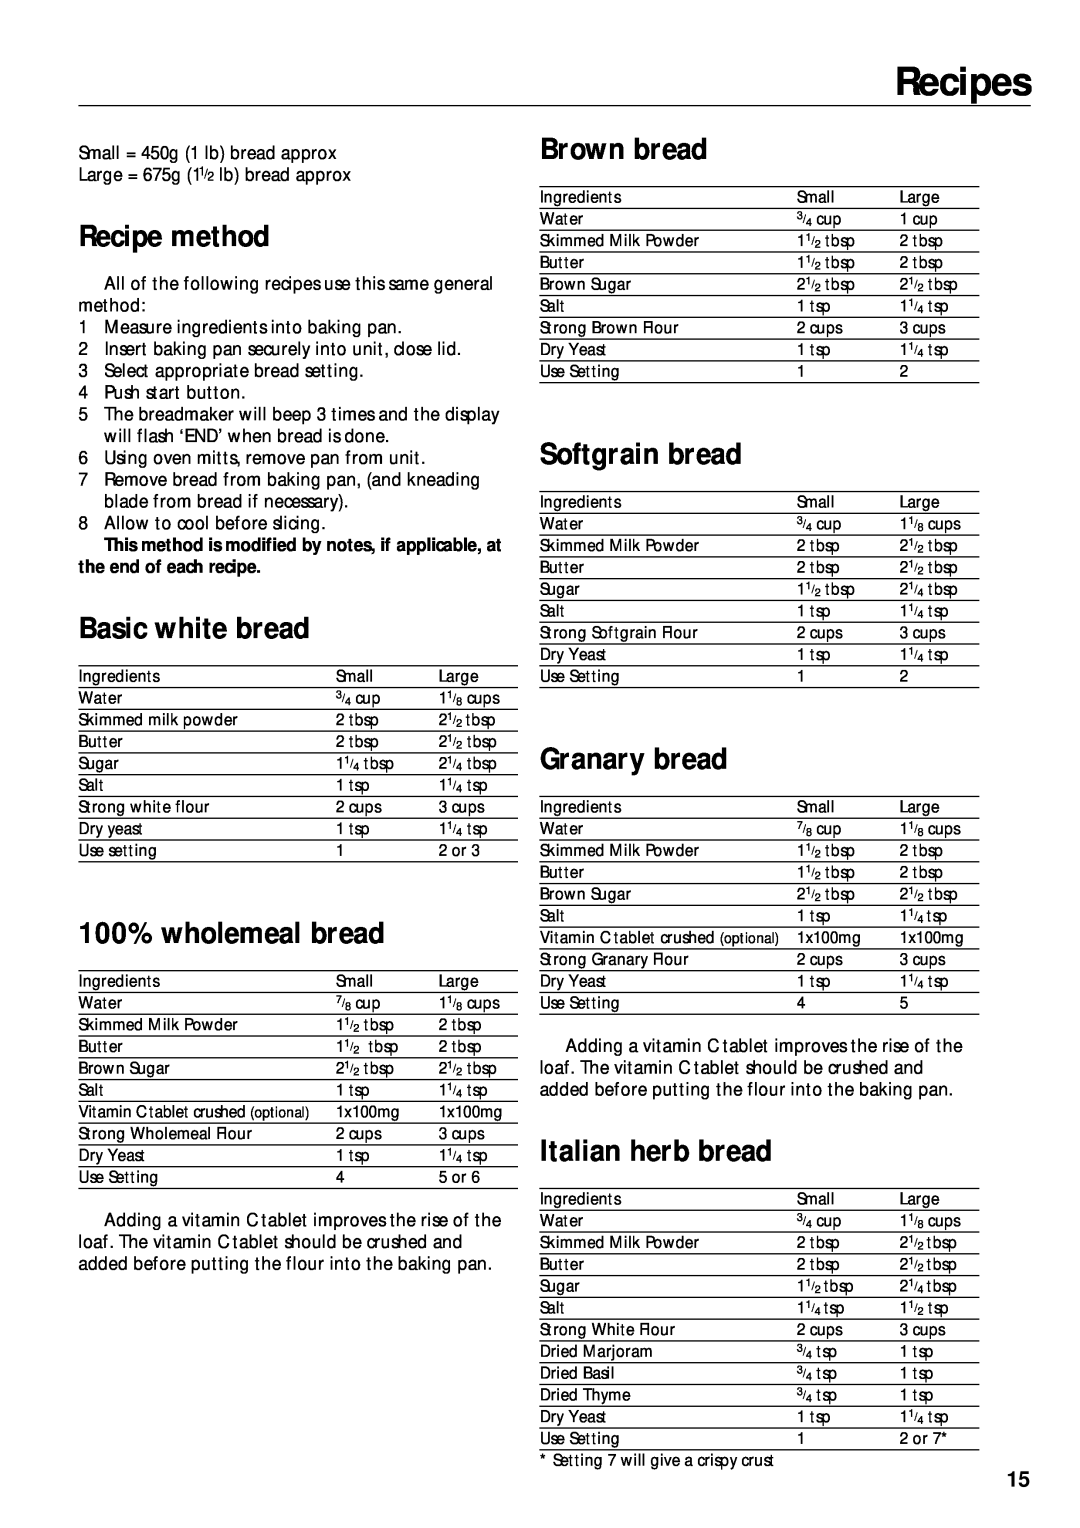 Morphy Richards 48230, 48220 Recipes, Recipe method, Basic white bread, 100% wholemeal bread, Brown bread, Softgrain bread 